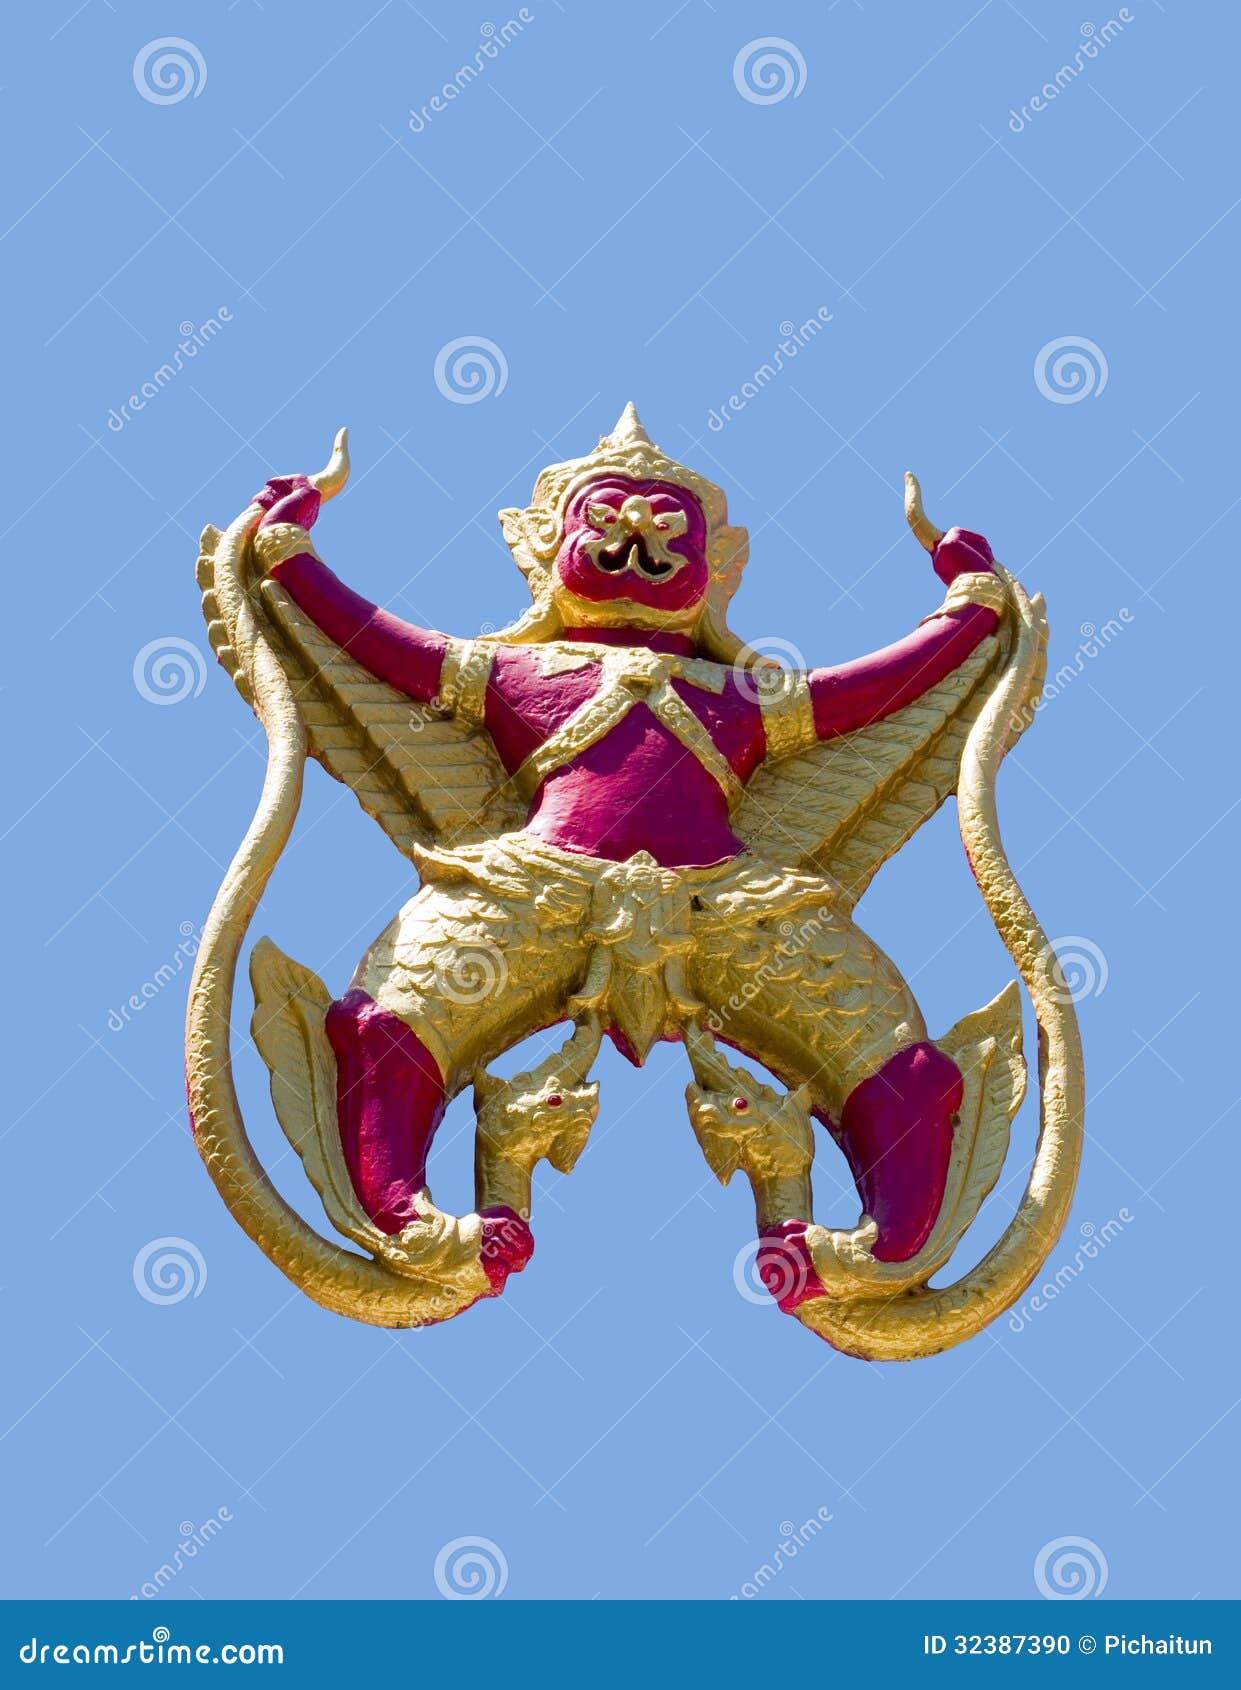 Garuda And Naga. Stock Photo - Image: 32387390